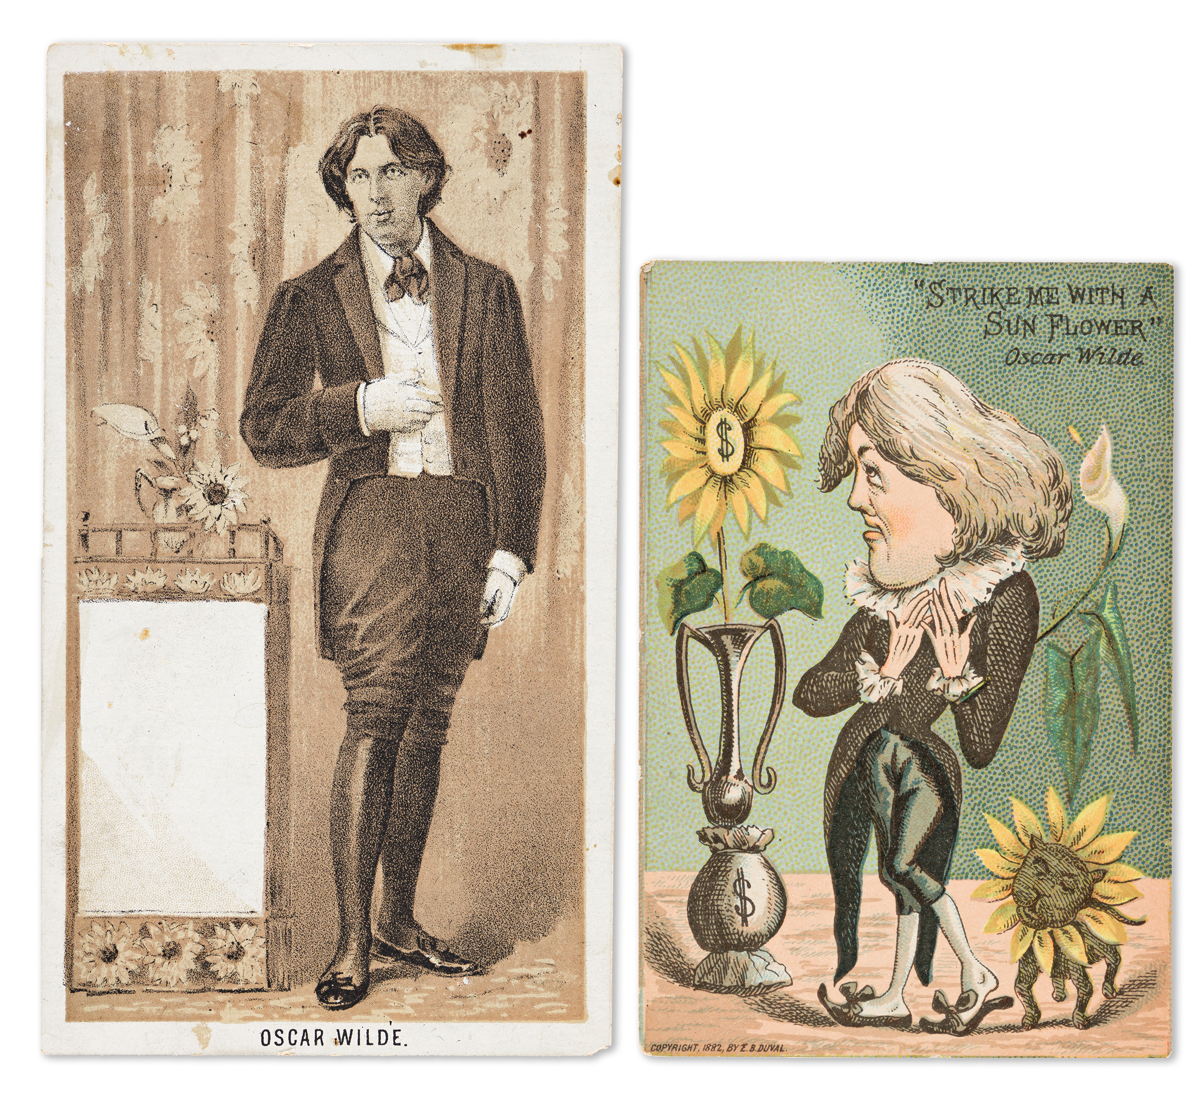 OSCAR WILDE (1854-1900) Group of Oscar Wilde advertising cards and theatrical photos.